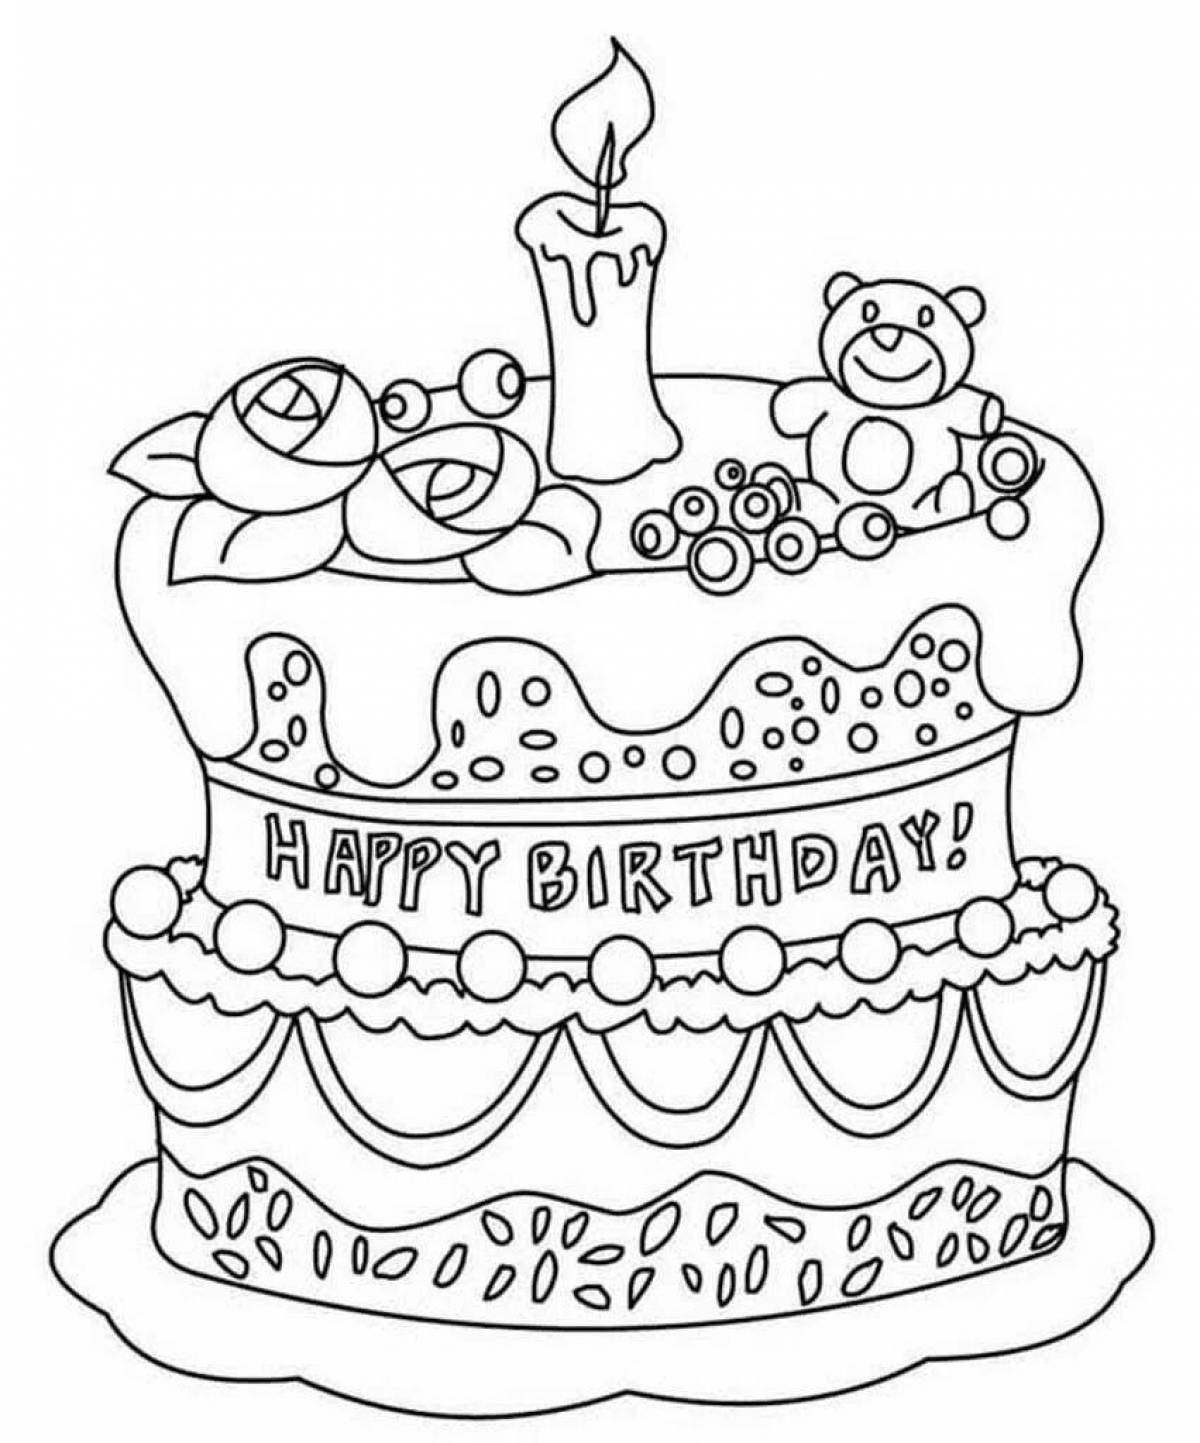 Birthday cake #1